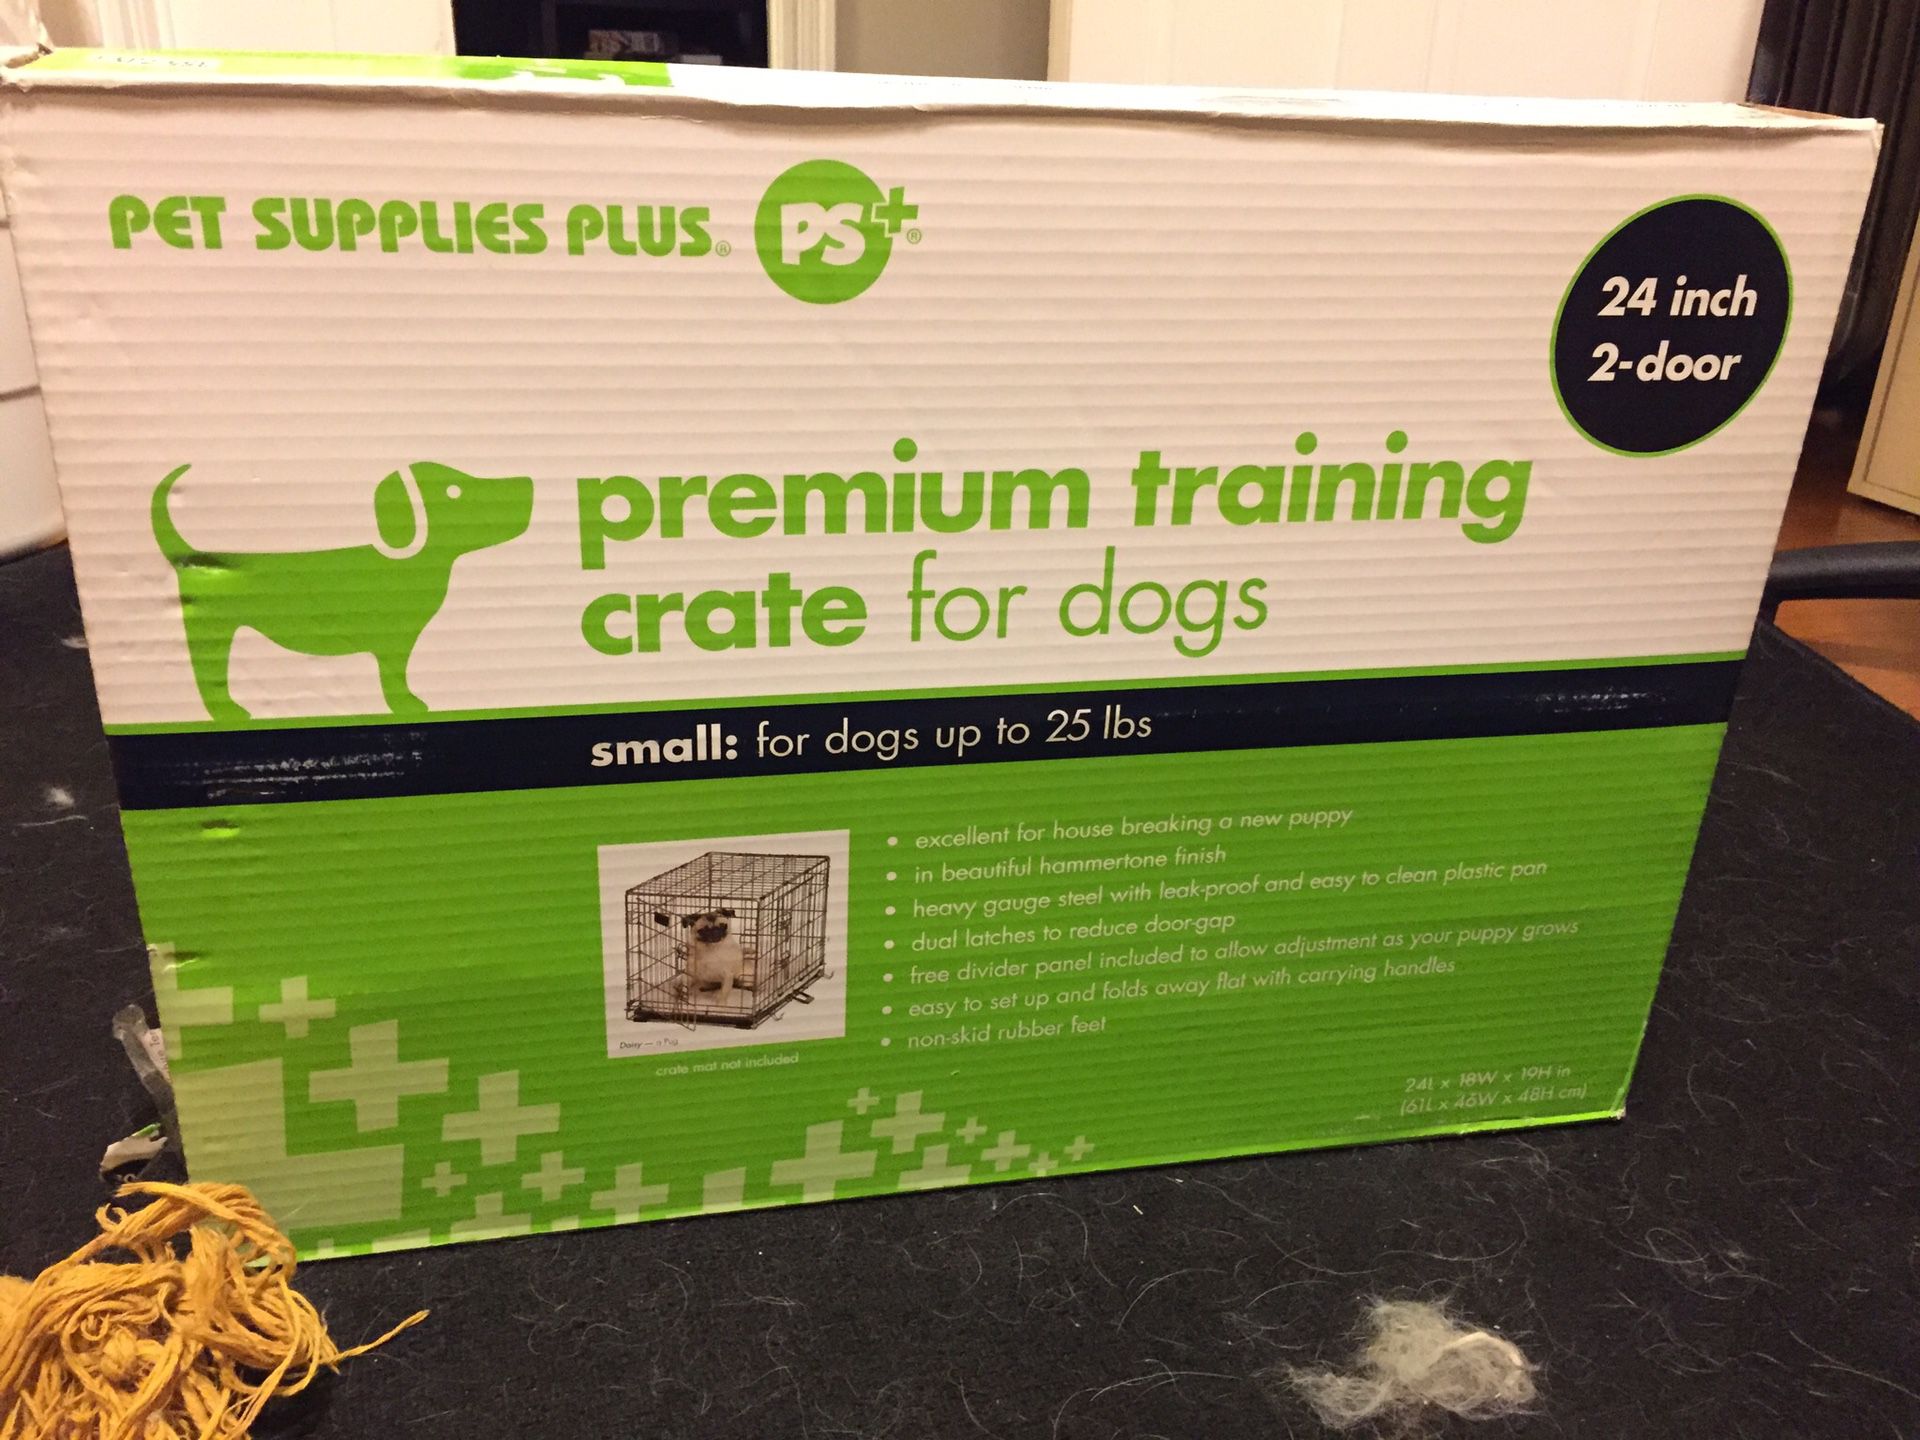 Small dog crate - $10 - Brand New Unopened Box